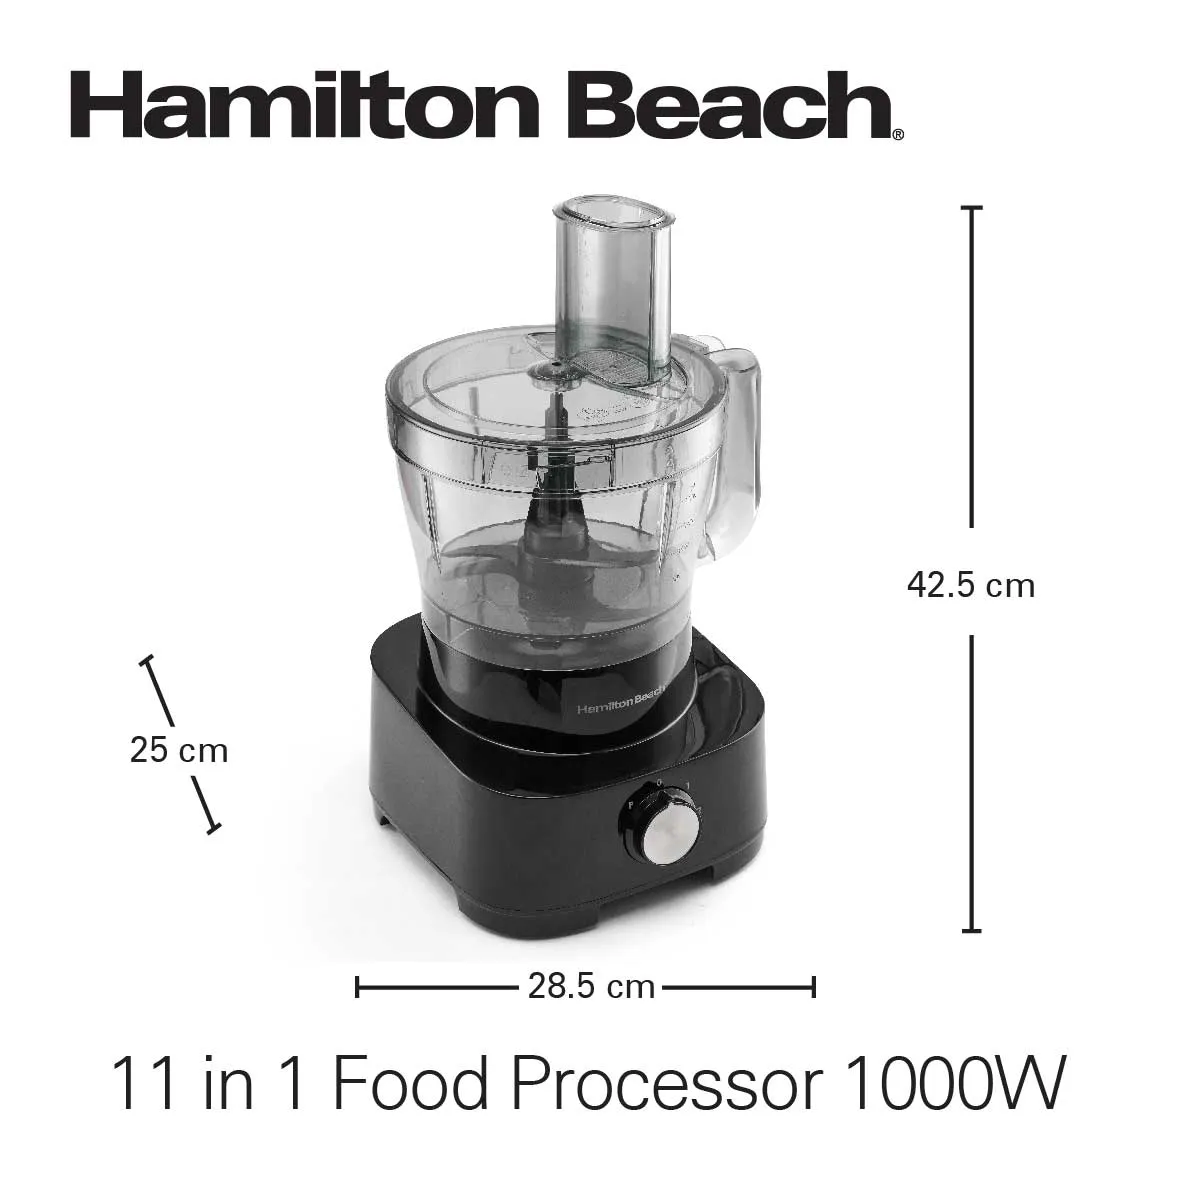 Hamilton Beach 11 in 1 Food Processor 1000W